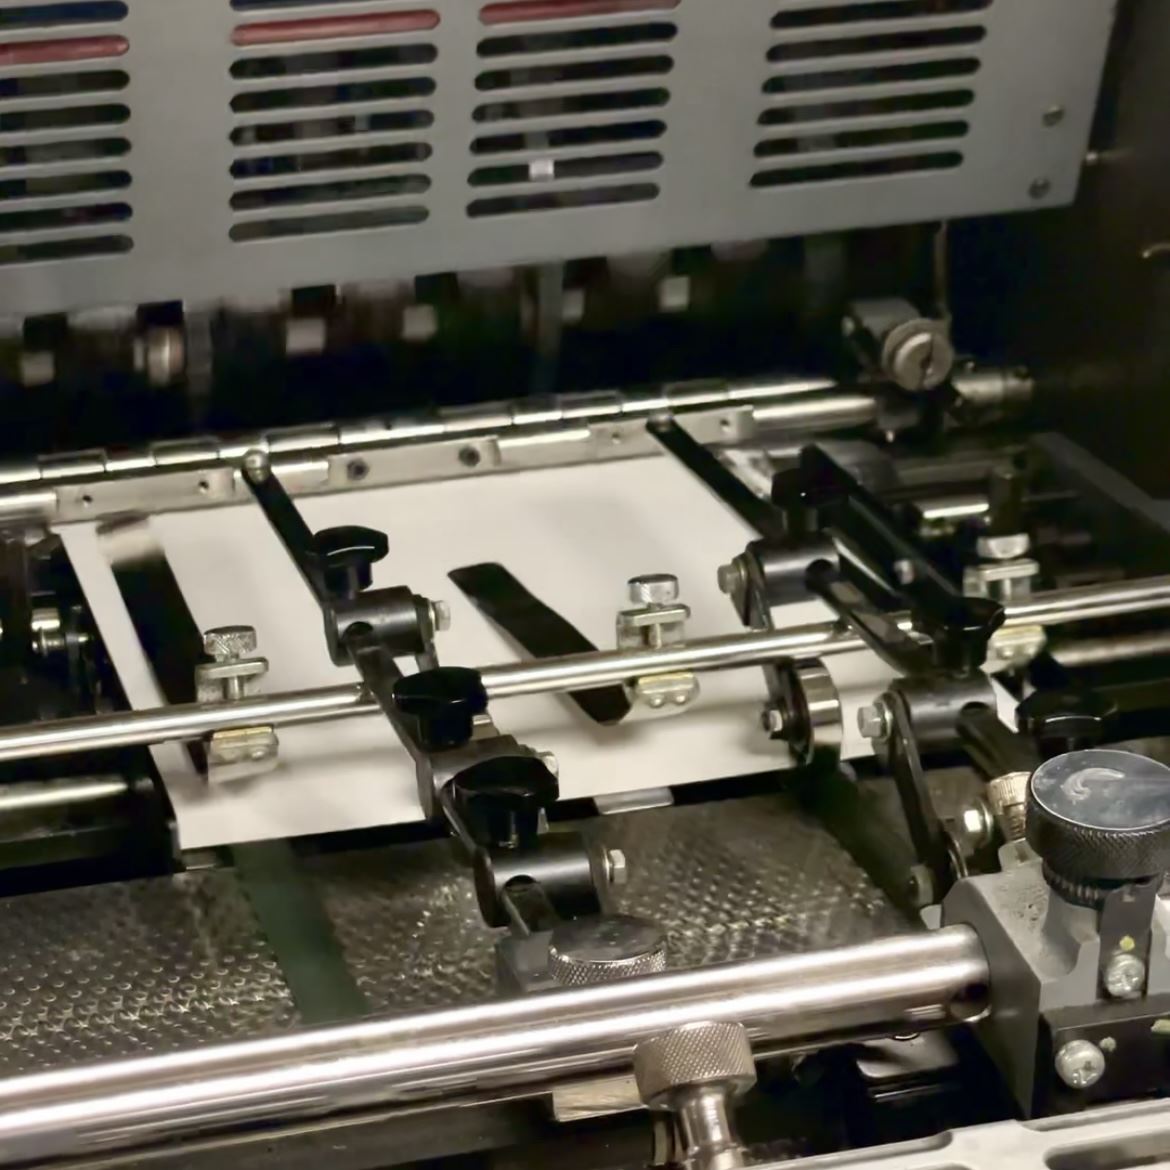 An image of an offset printing press running.